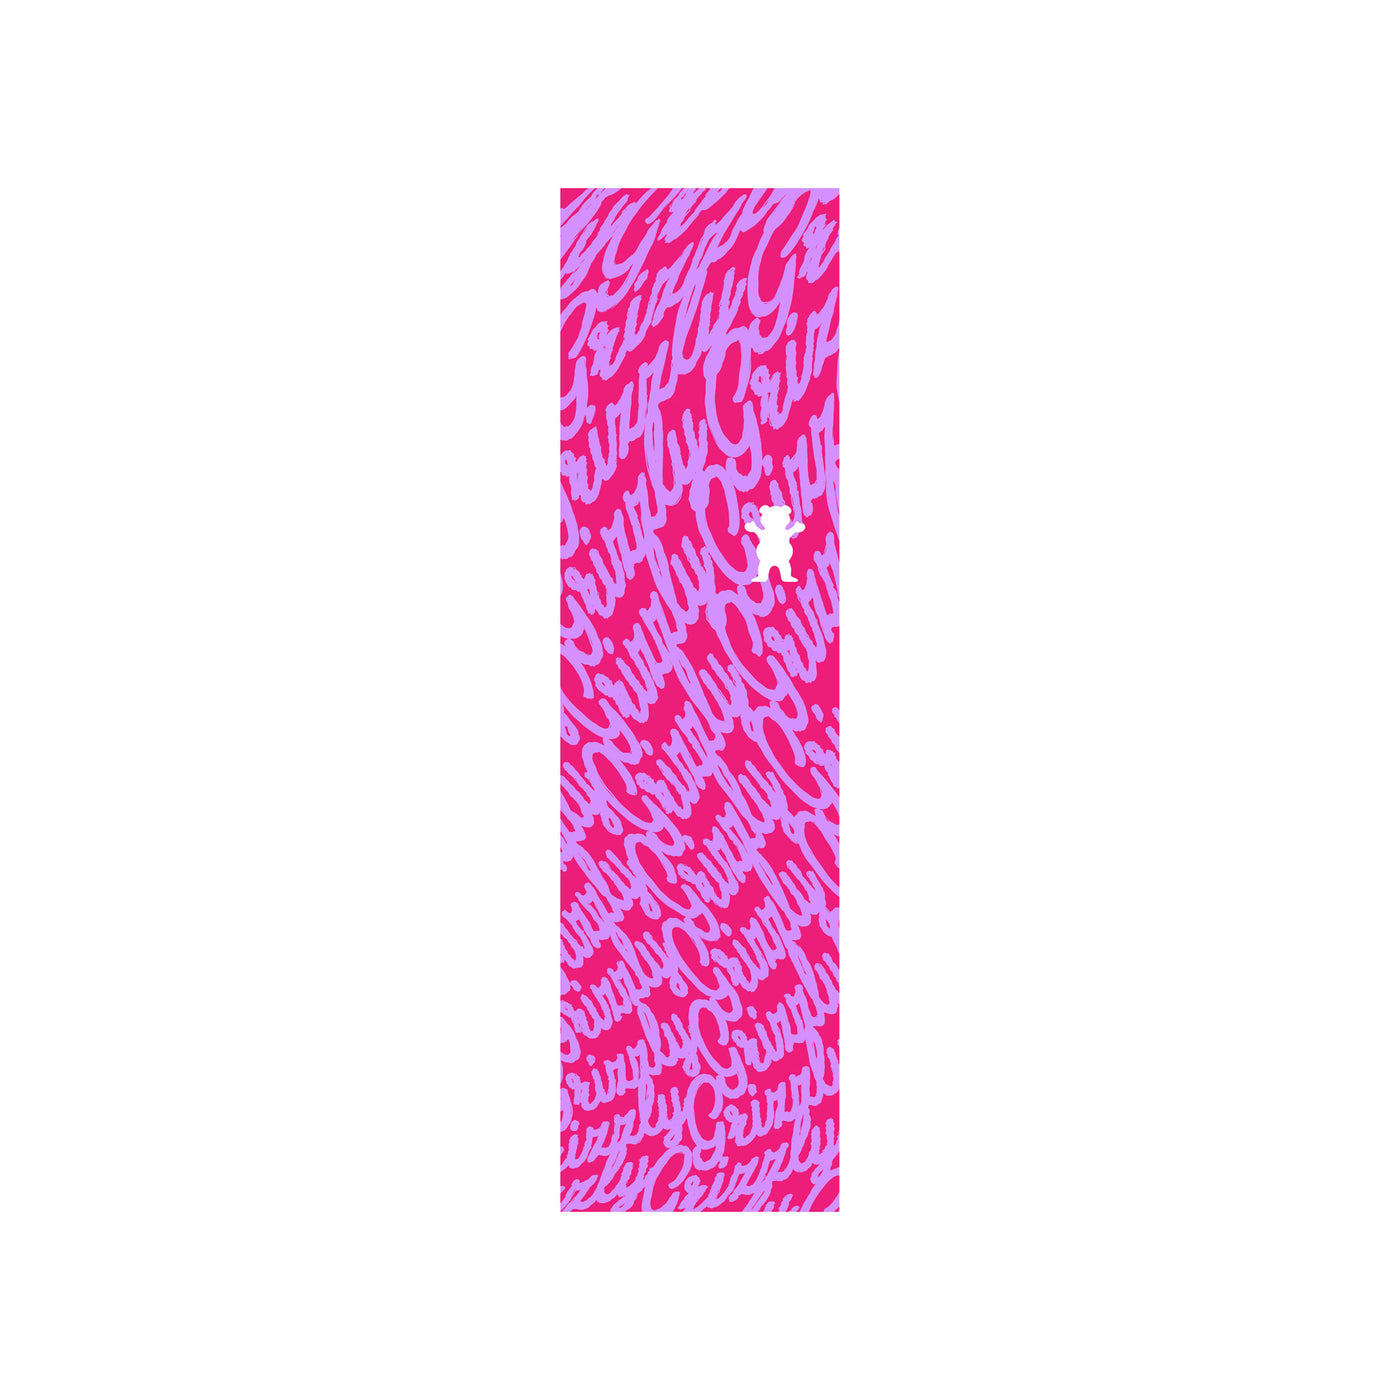 Rabbit Hole Griptape Sheet - Pink